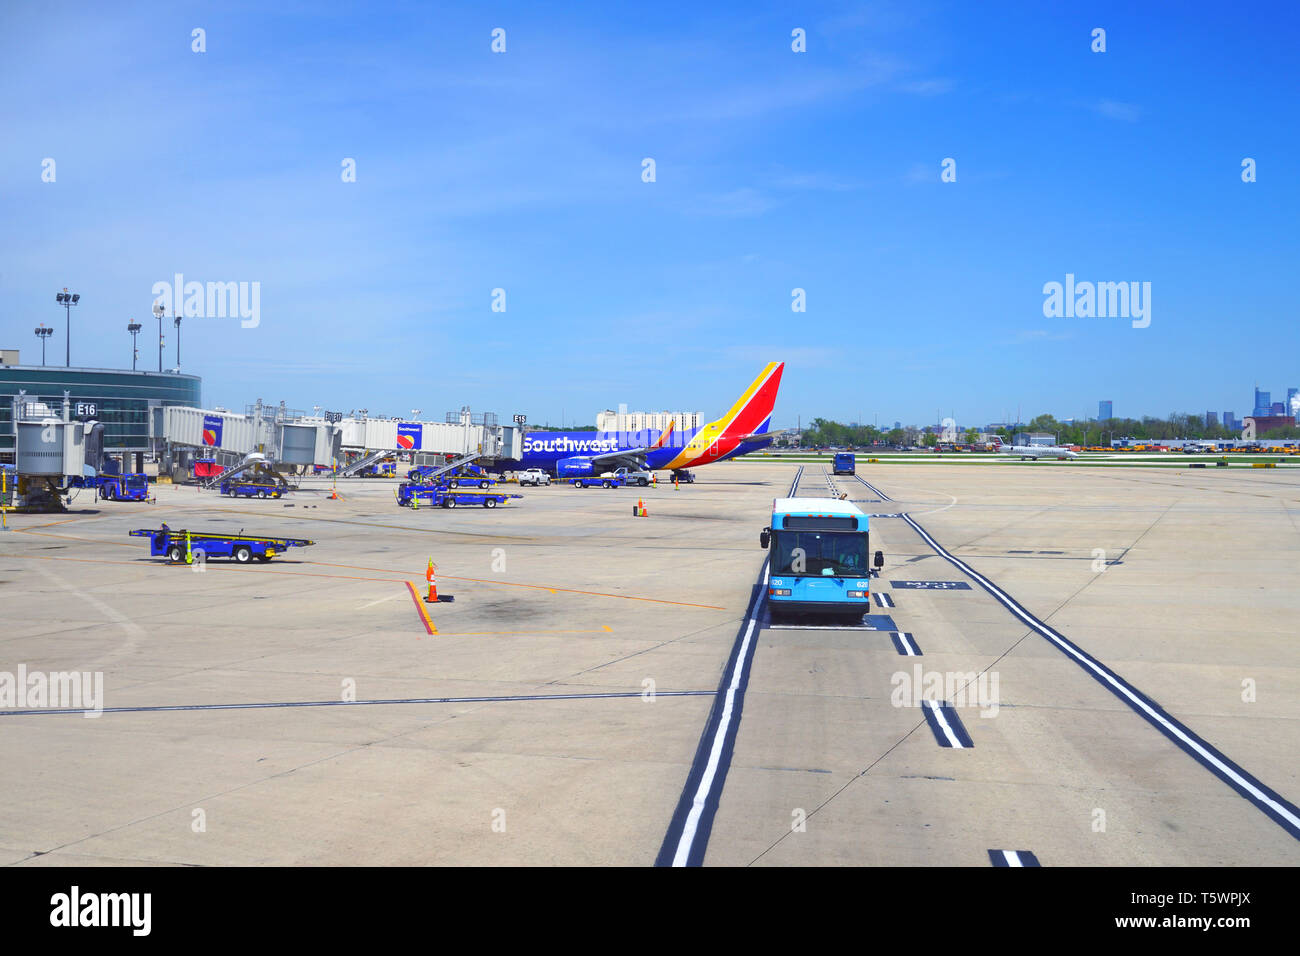 PHILADELPHIA, PA-23 Apr 2019 - ein Flugzeug von Southwest Airlines (WN) an der Philadelphia International Airport (PHL). Stockfoto